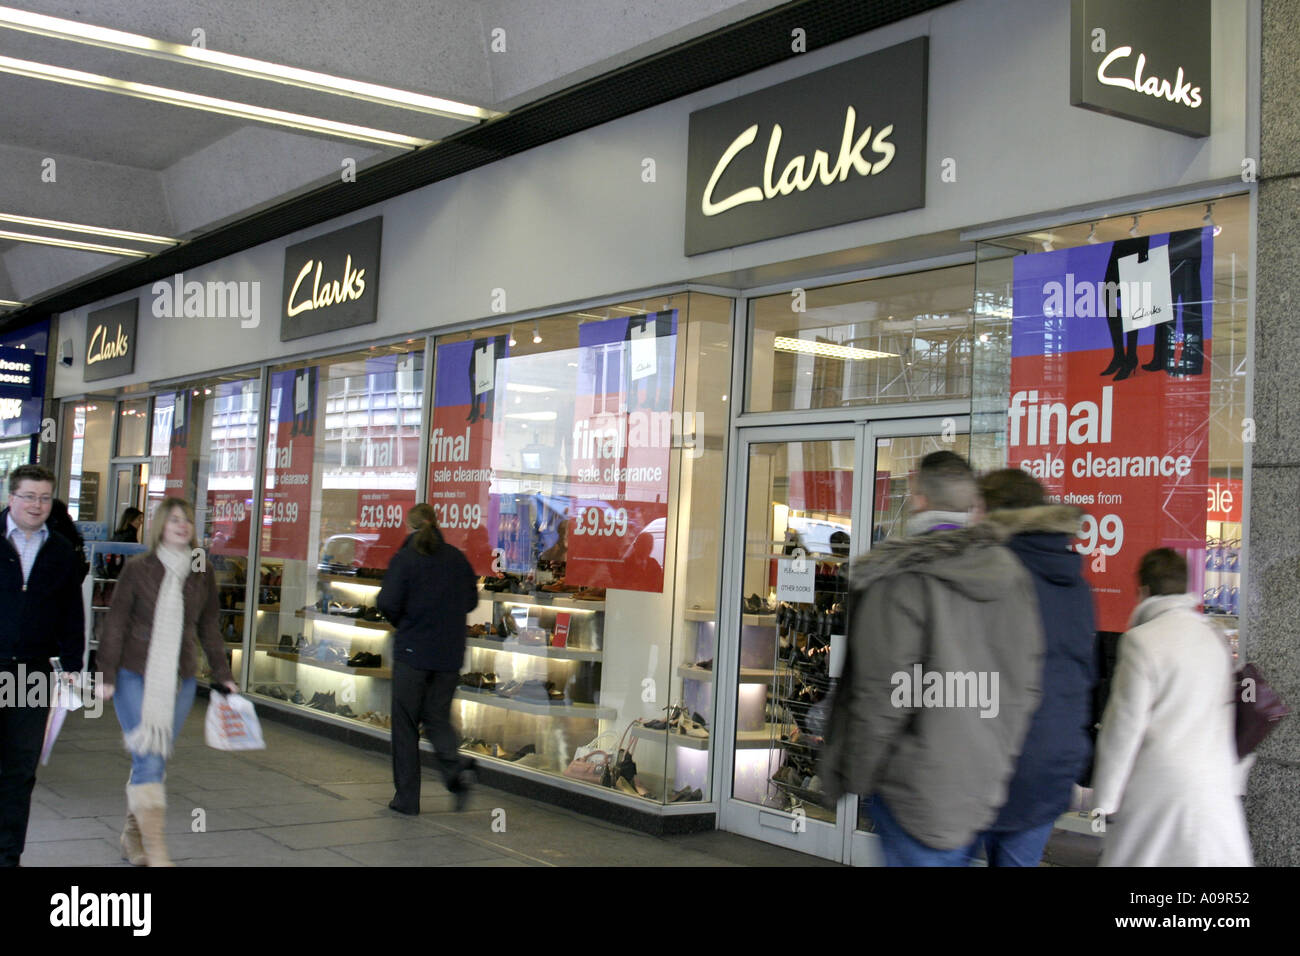 clarks shoes london stores